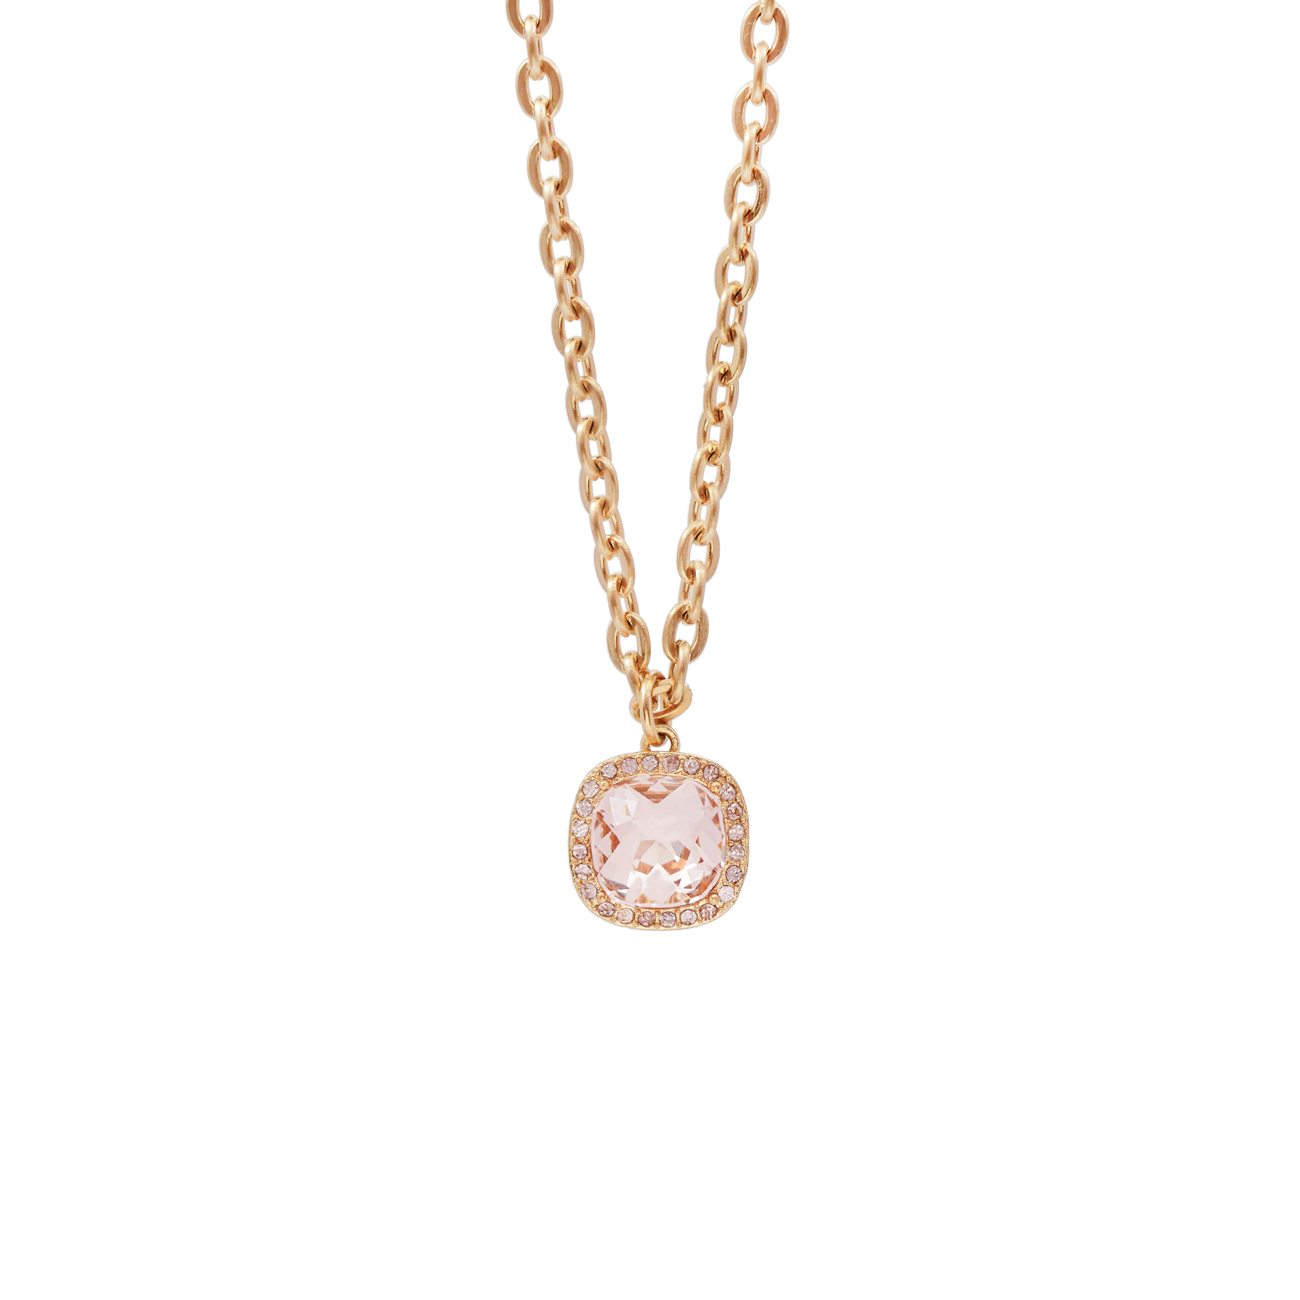 Tamara Crystal chain necklace - Peach